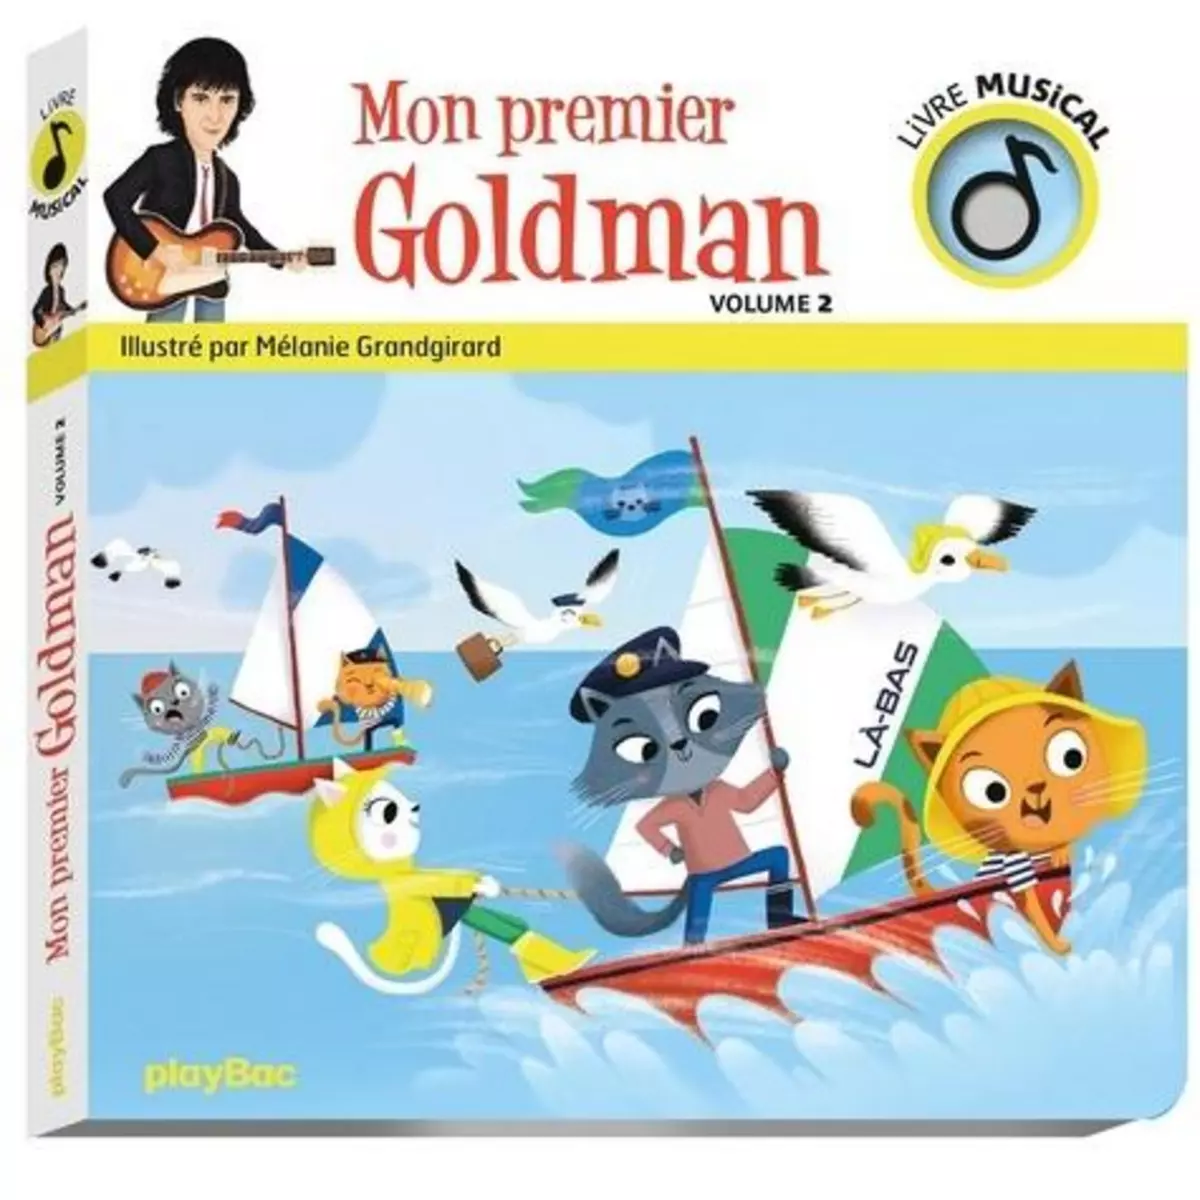  MON PREMIER GOLDMAN. VOLUME 2, Grandgirard Mélanie